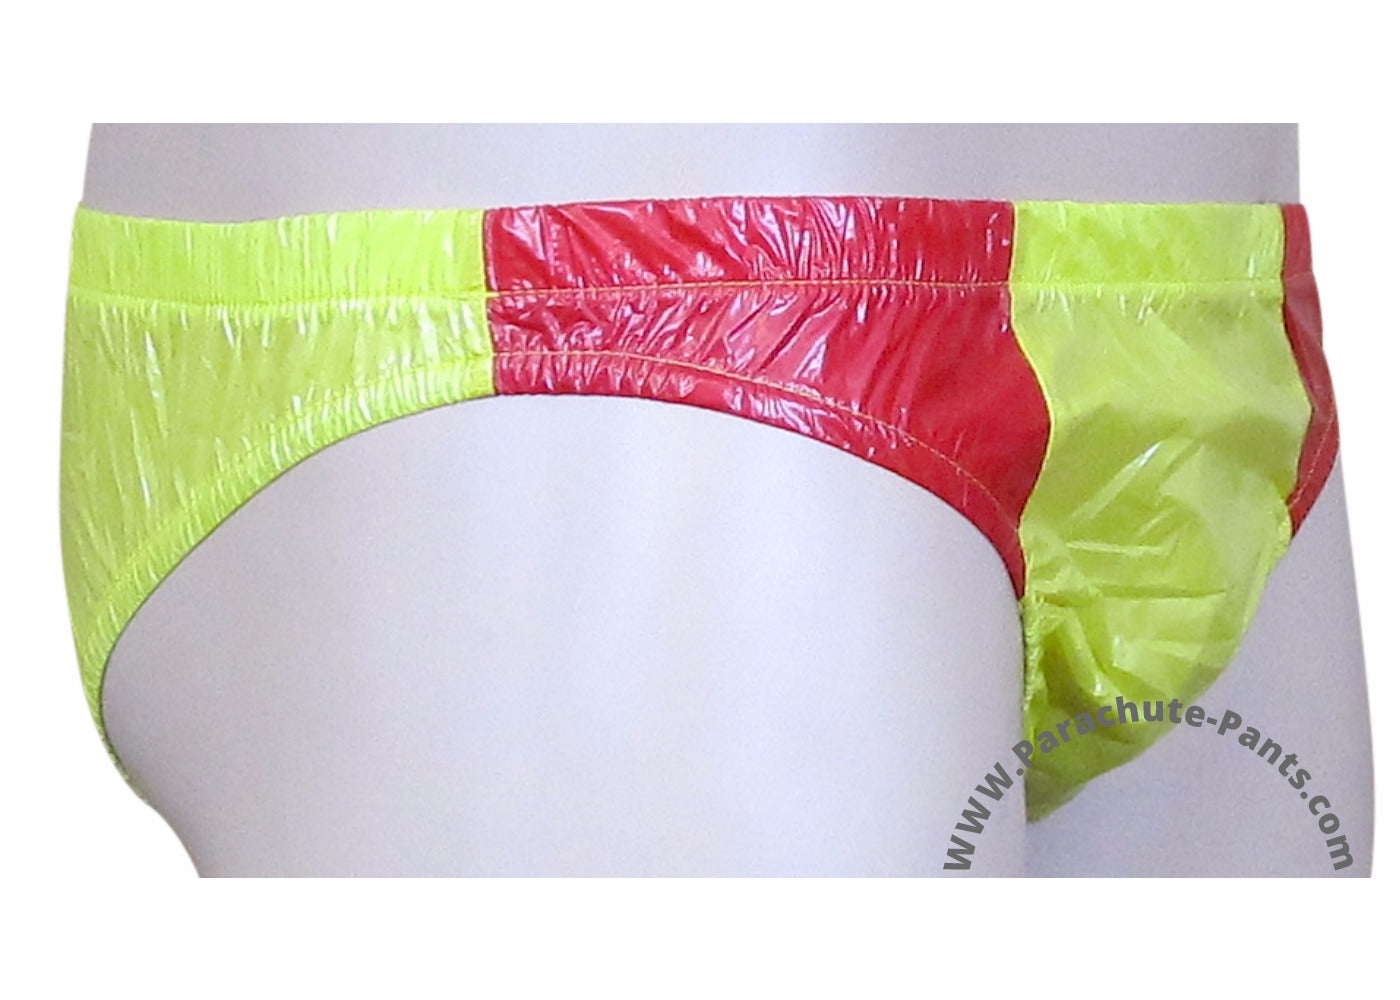 Bruno Yellow/Red Shiny Plastic Nylon Underwear Shorts